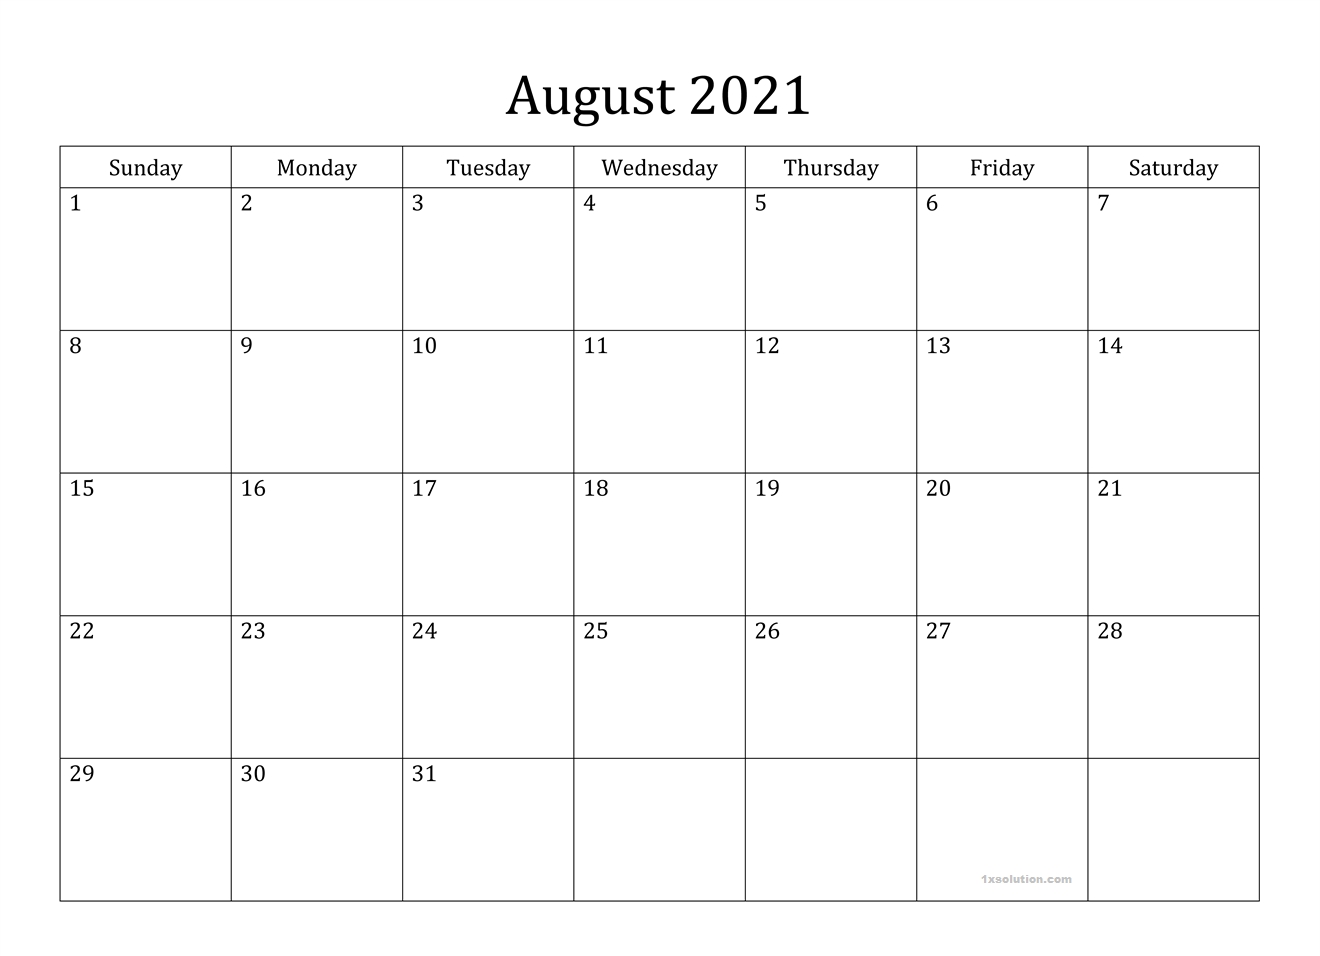 August 2021 Calendar Printable Schedule Excelsheet | Calendar August 2020 To August 2021 Calendar